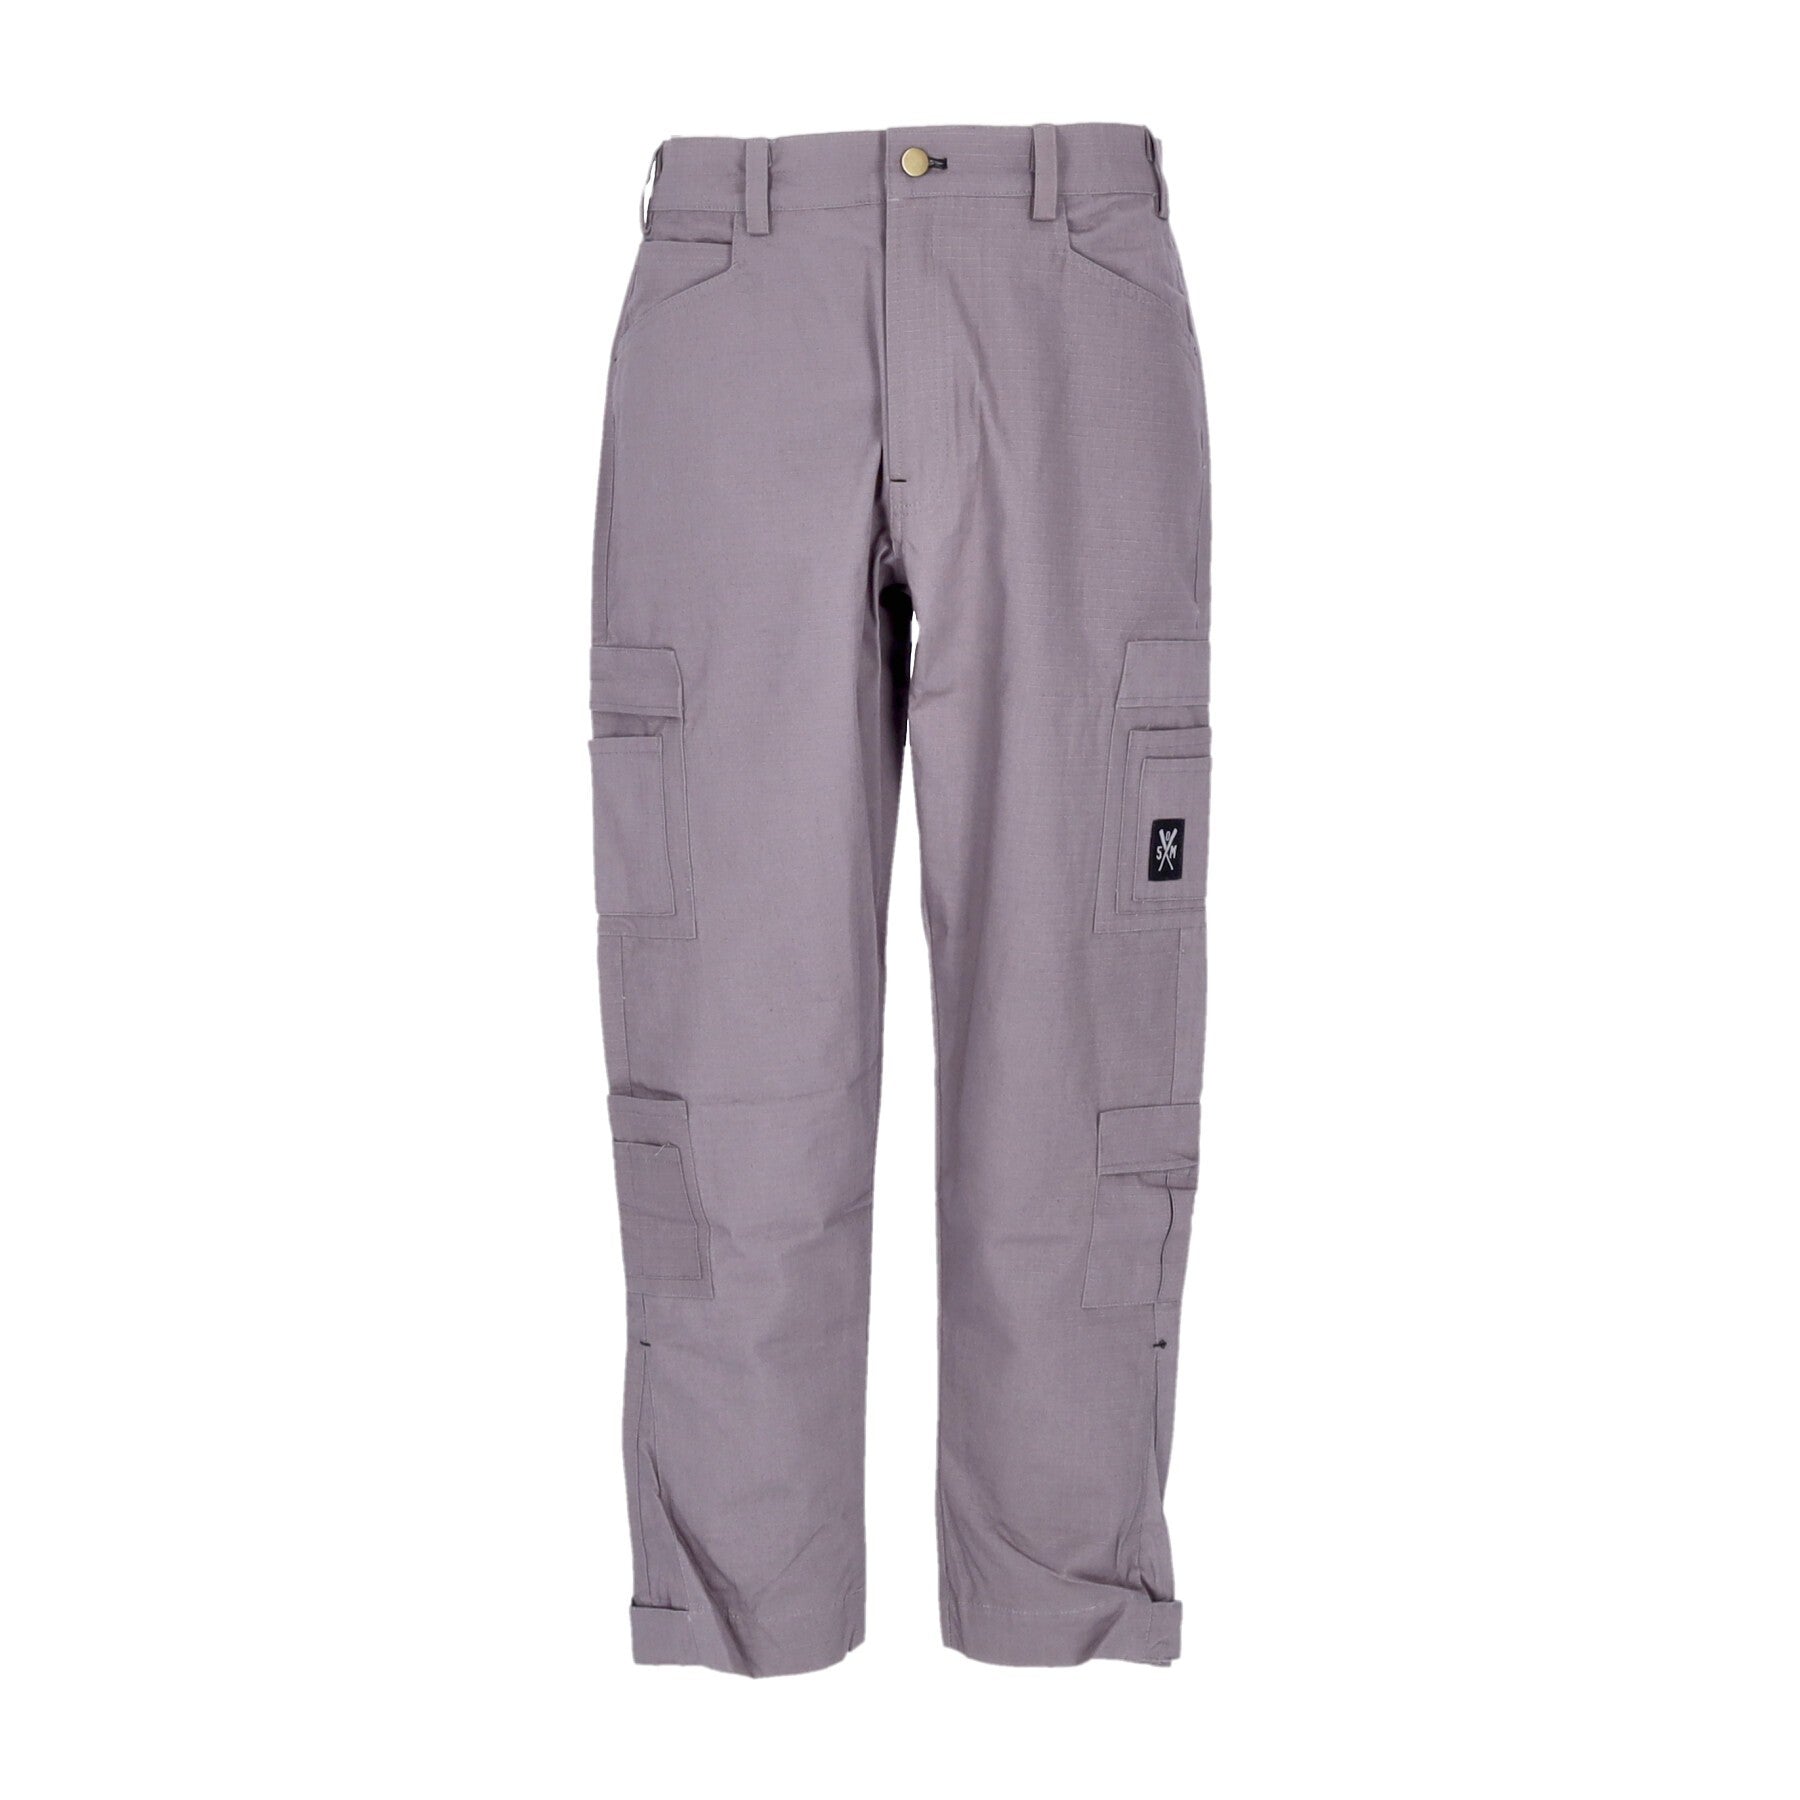 Retrofuture Combat Pants Men's Long Pants Grey